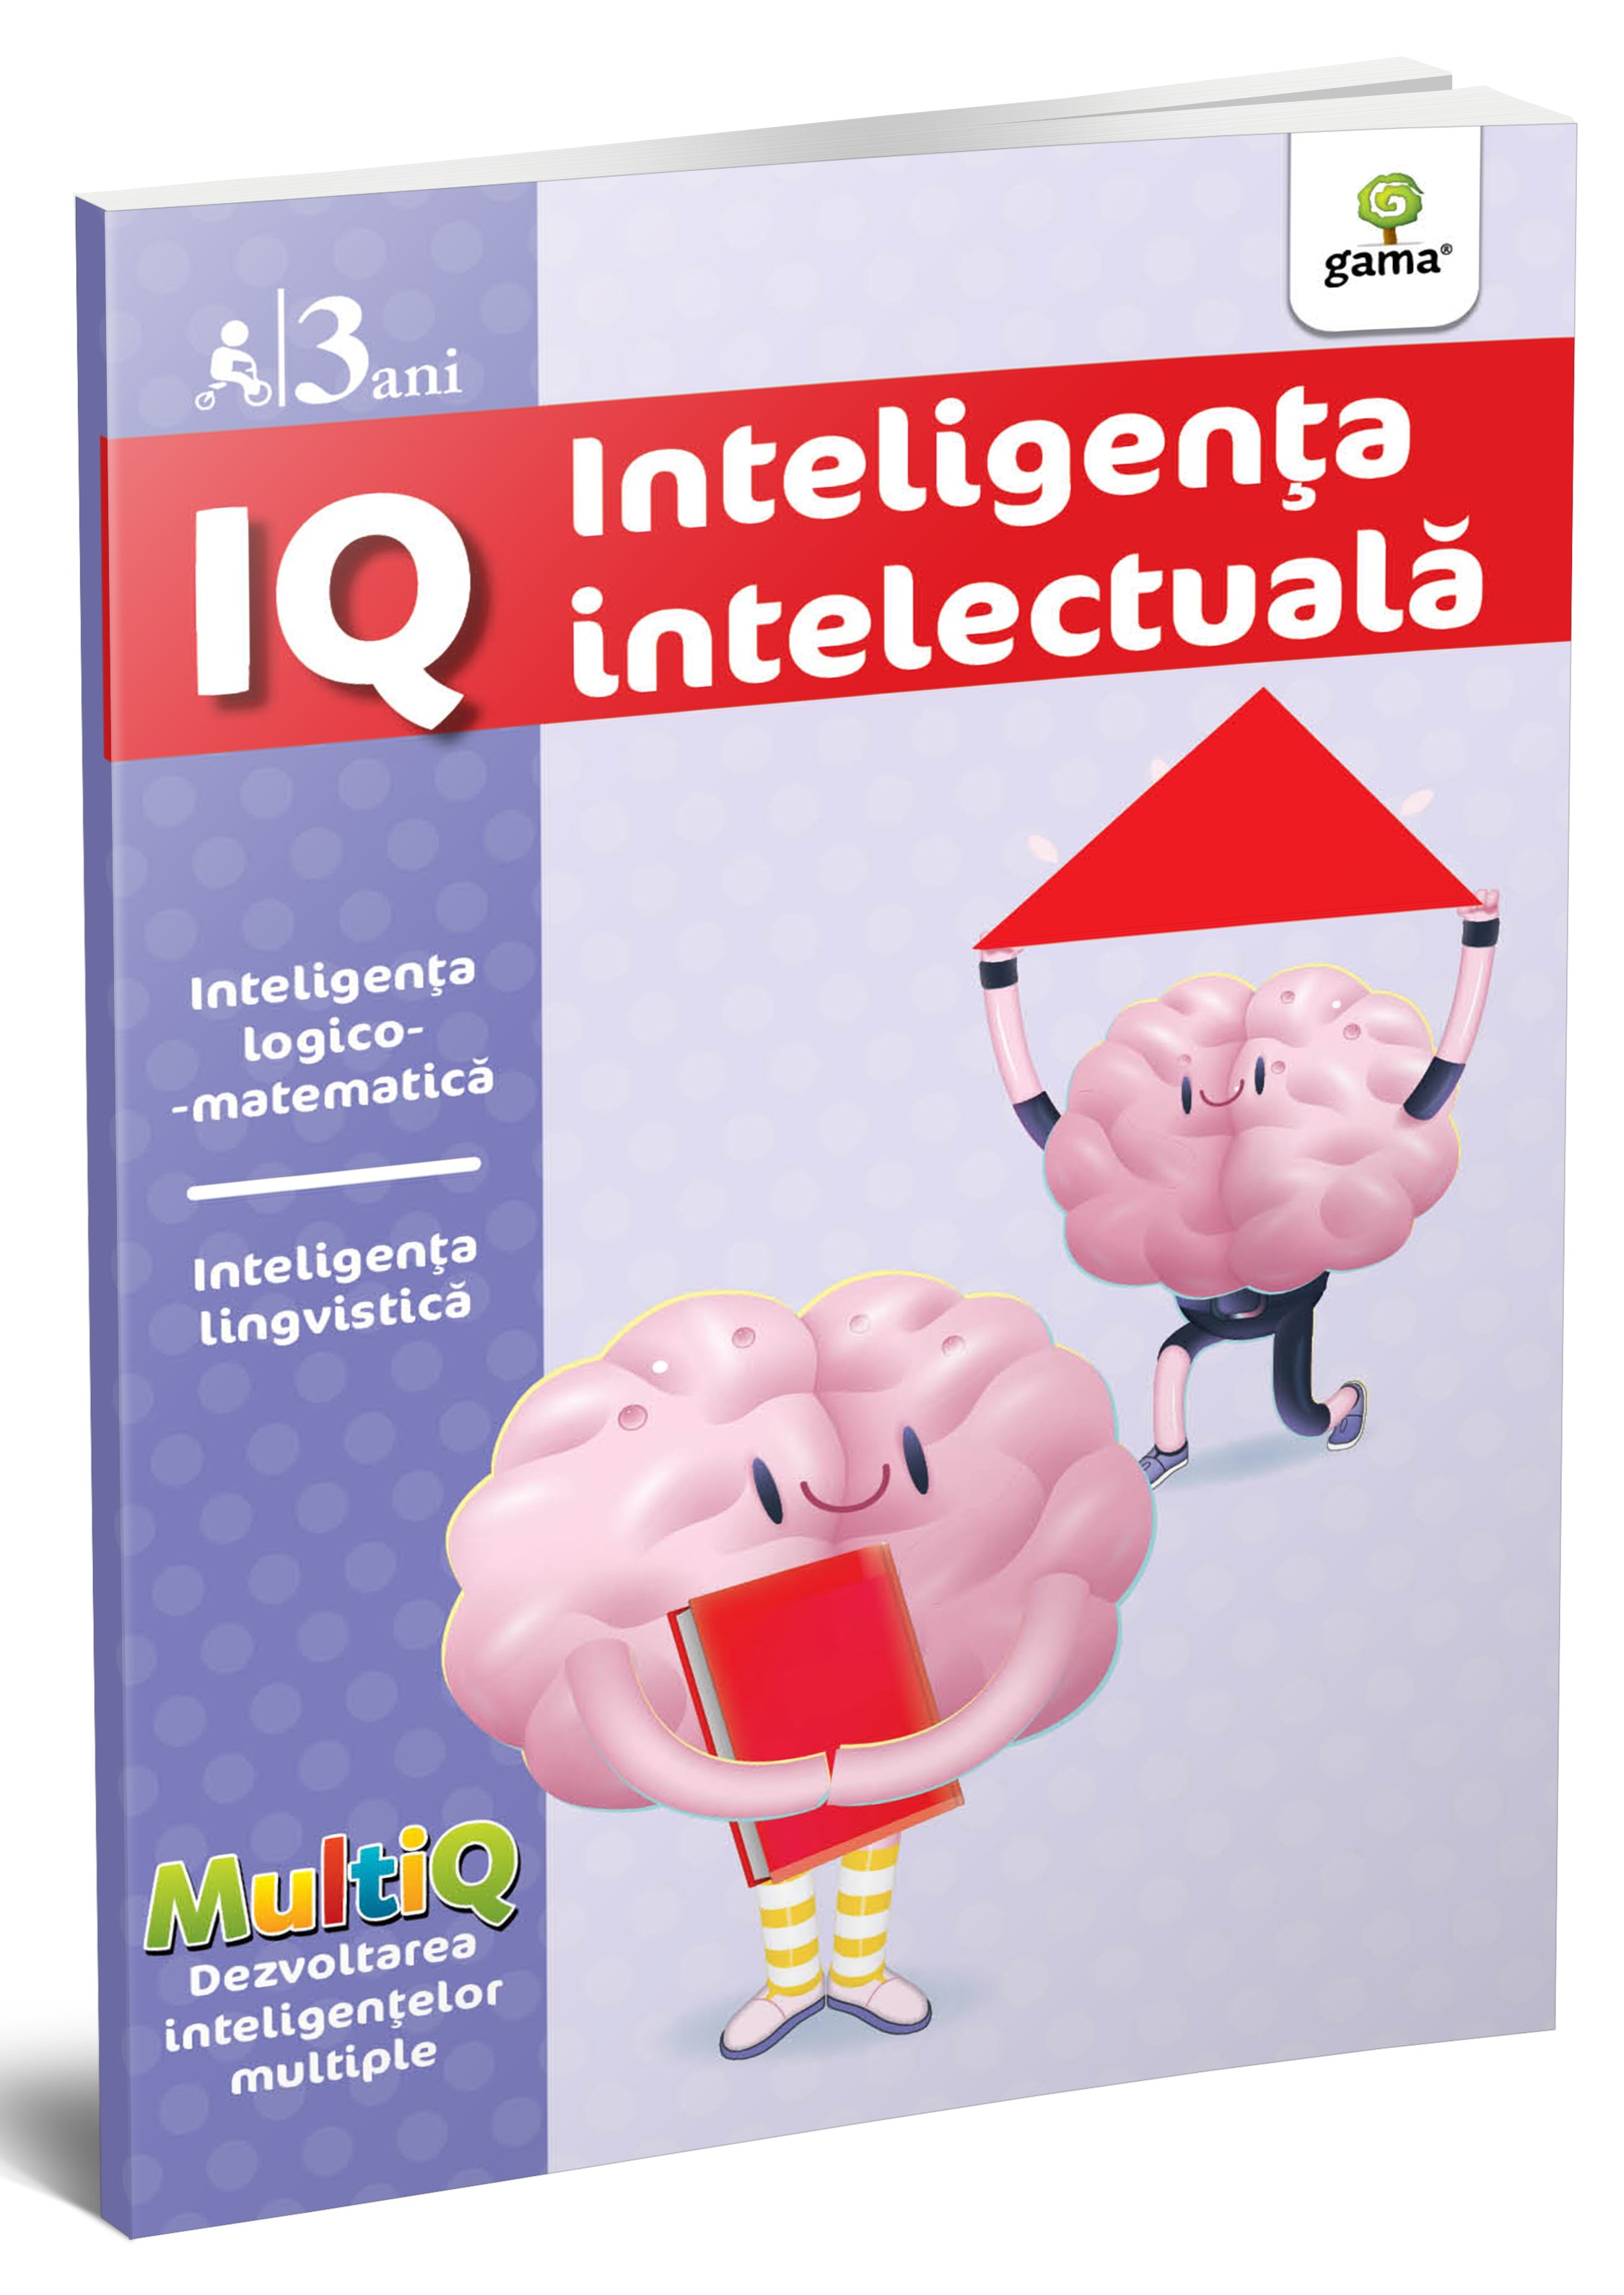 IQ.3 ani - Inteligenta intelectuala